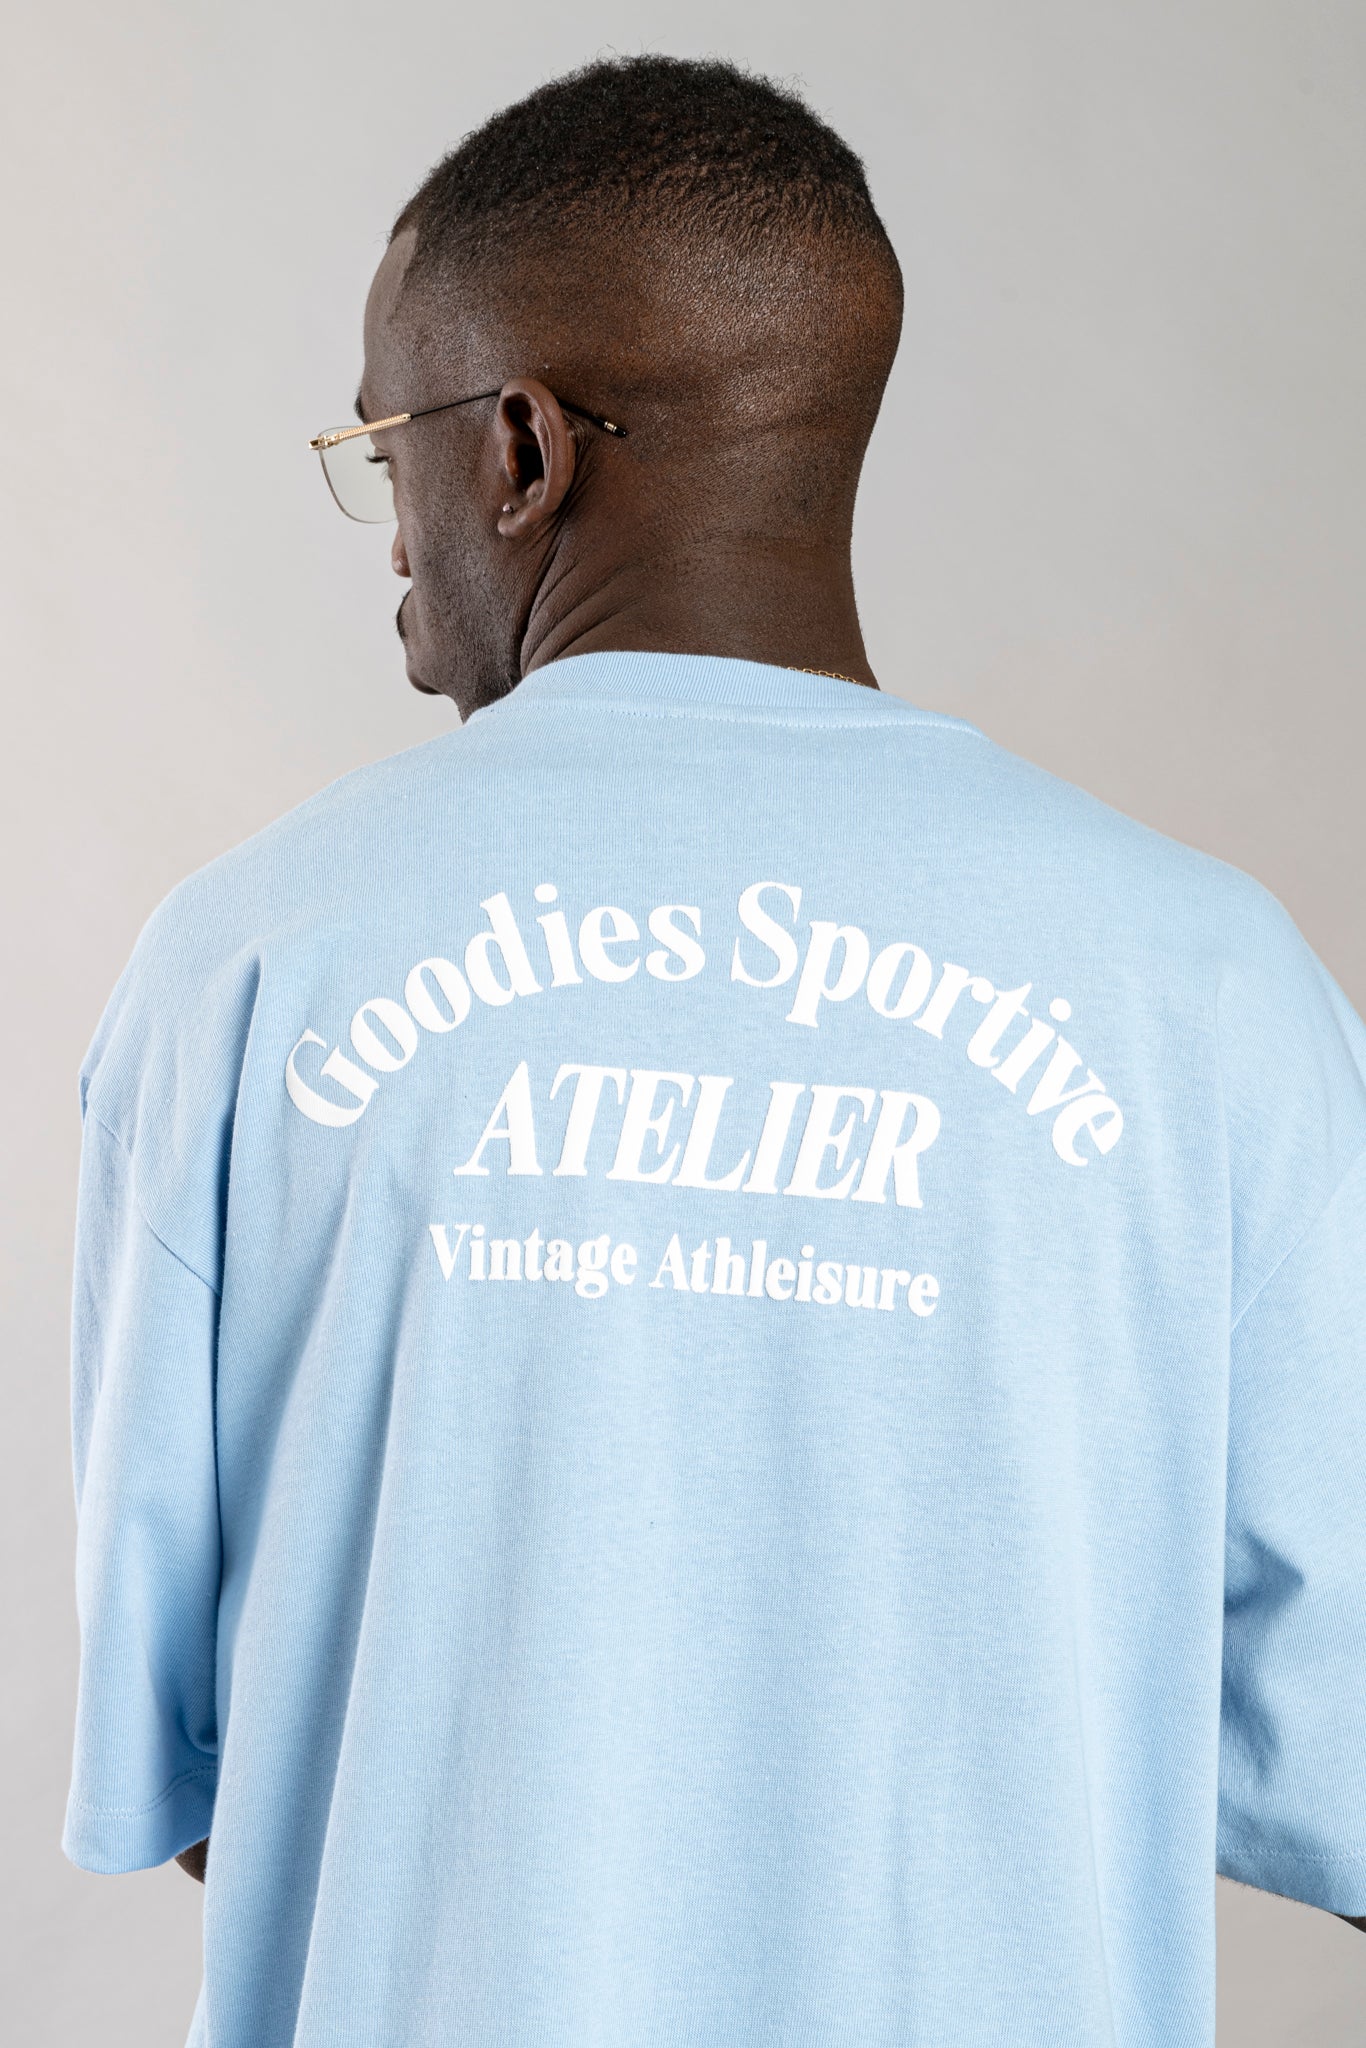 Goodies Sportive - Baby Blue Tee